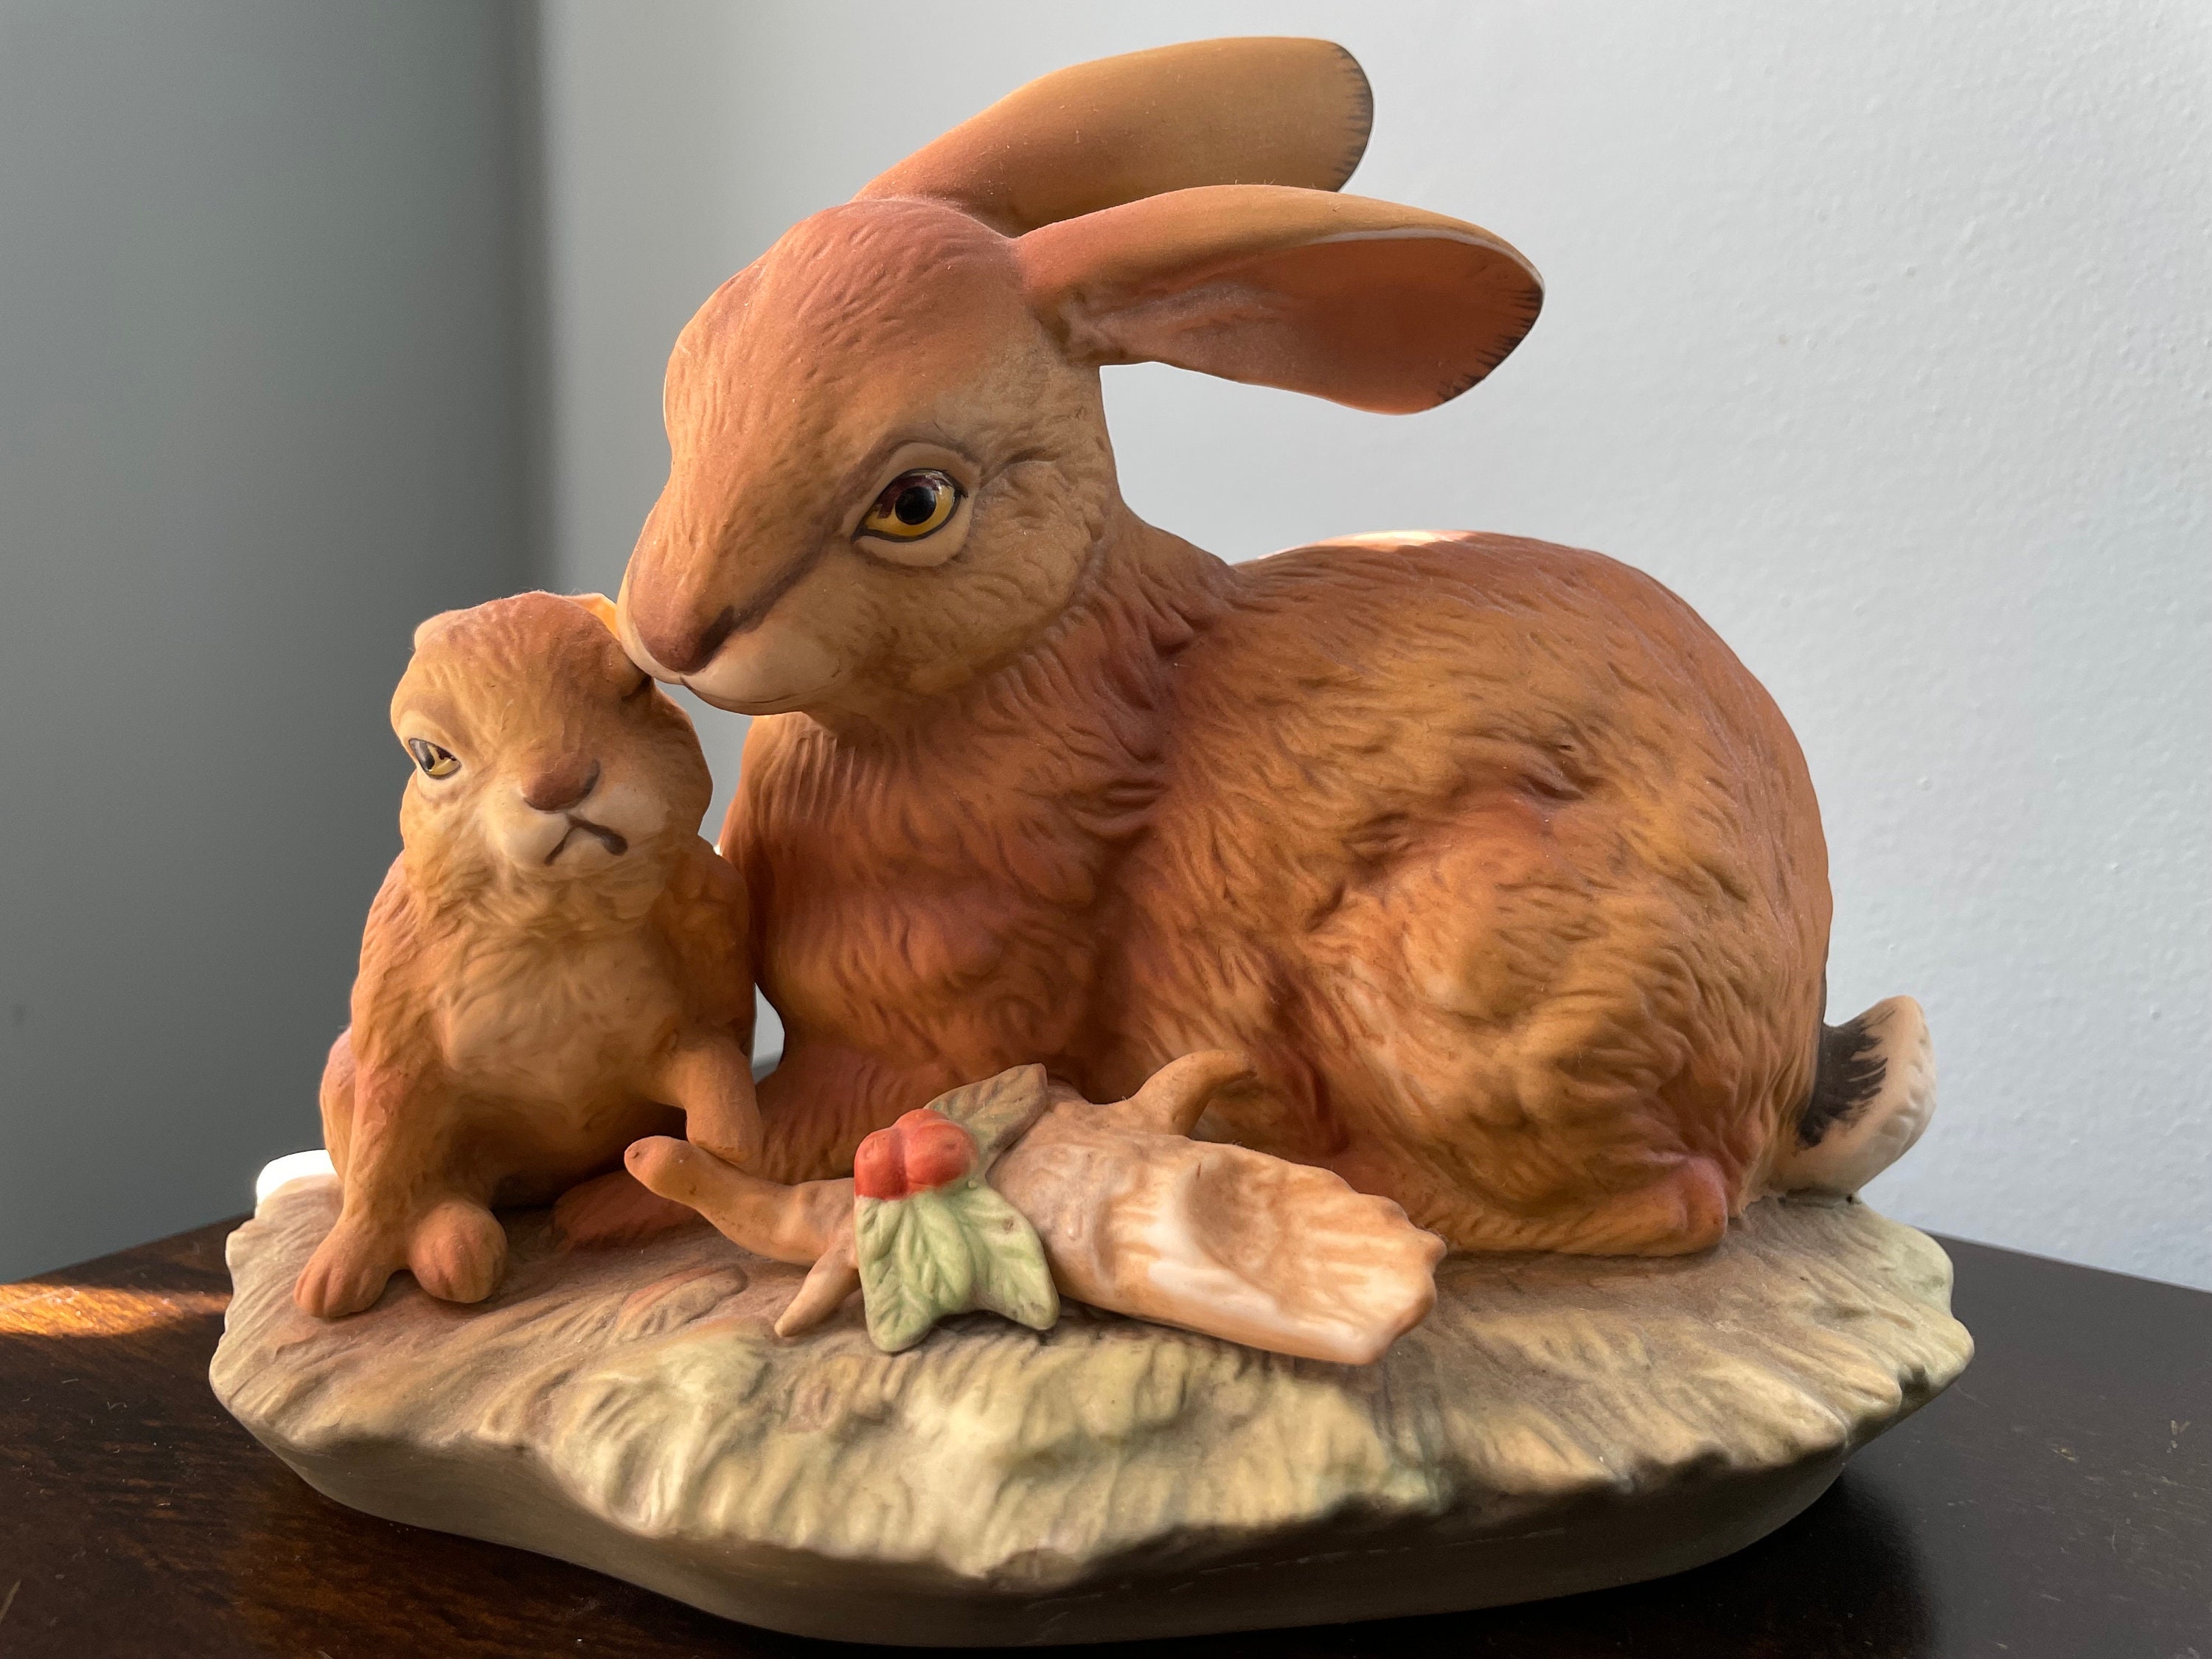 Home Interiors Gifts Bunny Buddies 14062-99 Pair Rabbit Figures Homco Decor